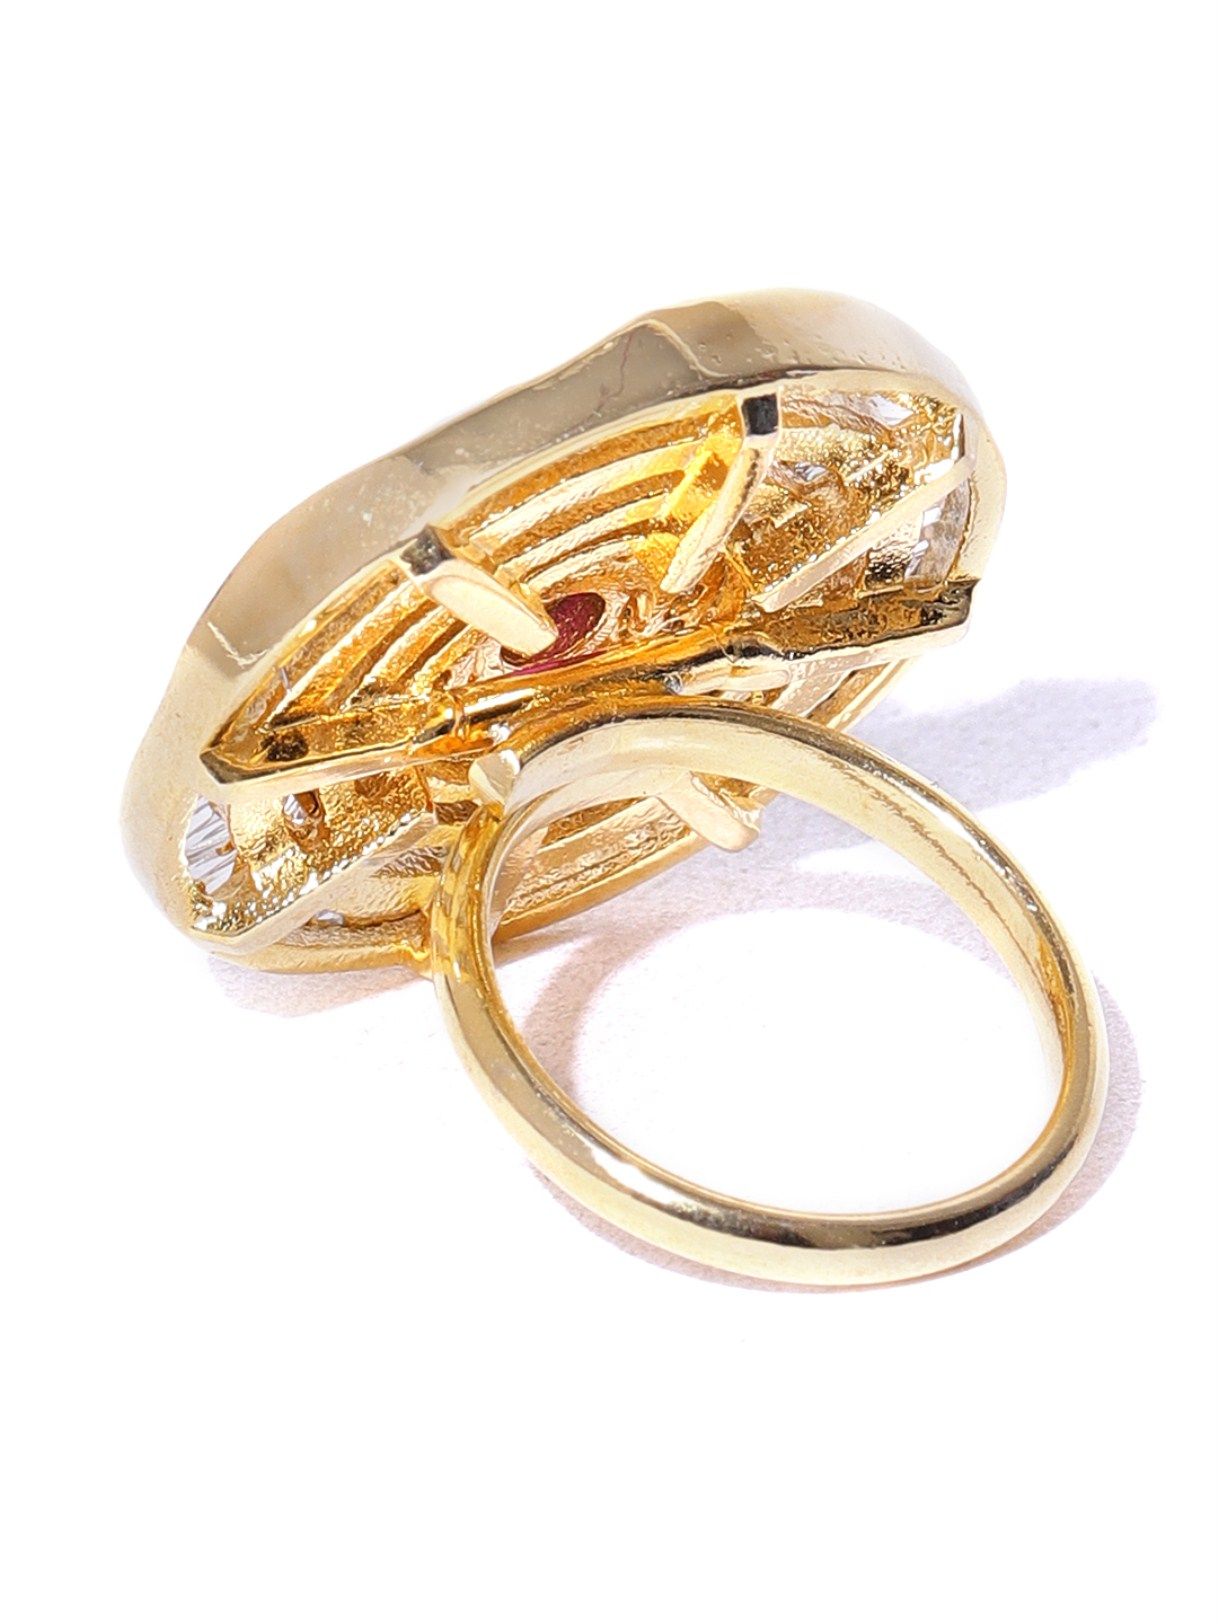 vintage antique gold wedding rings arabic| Alibaba.com